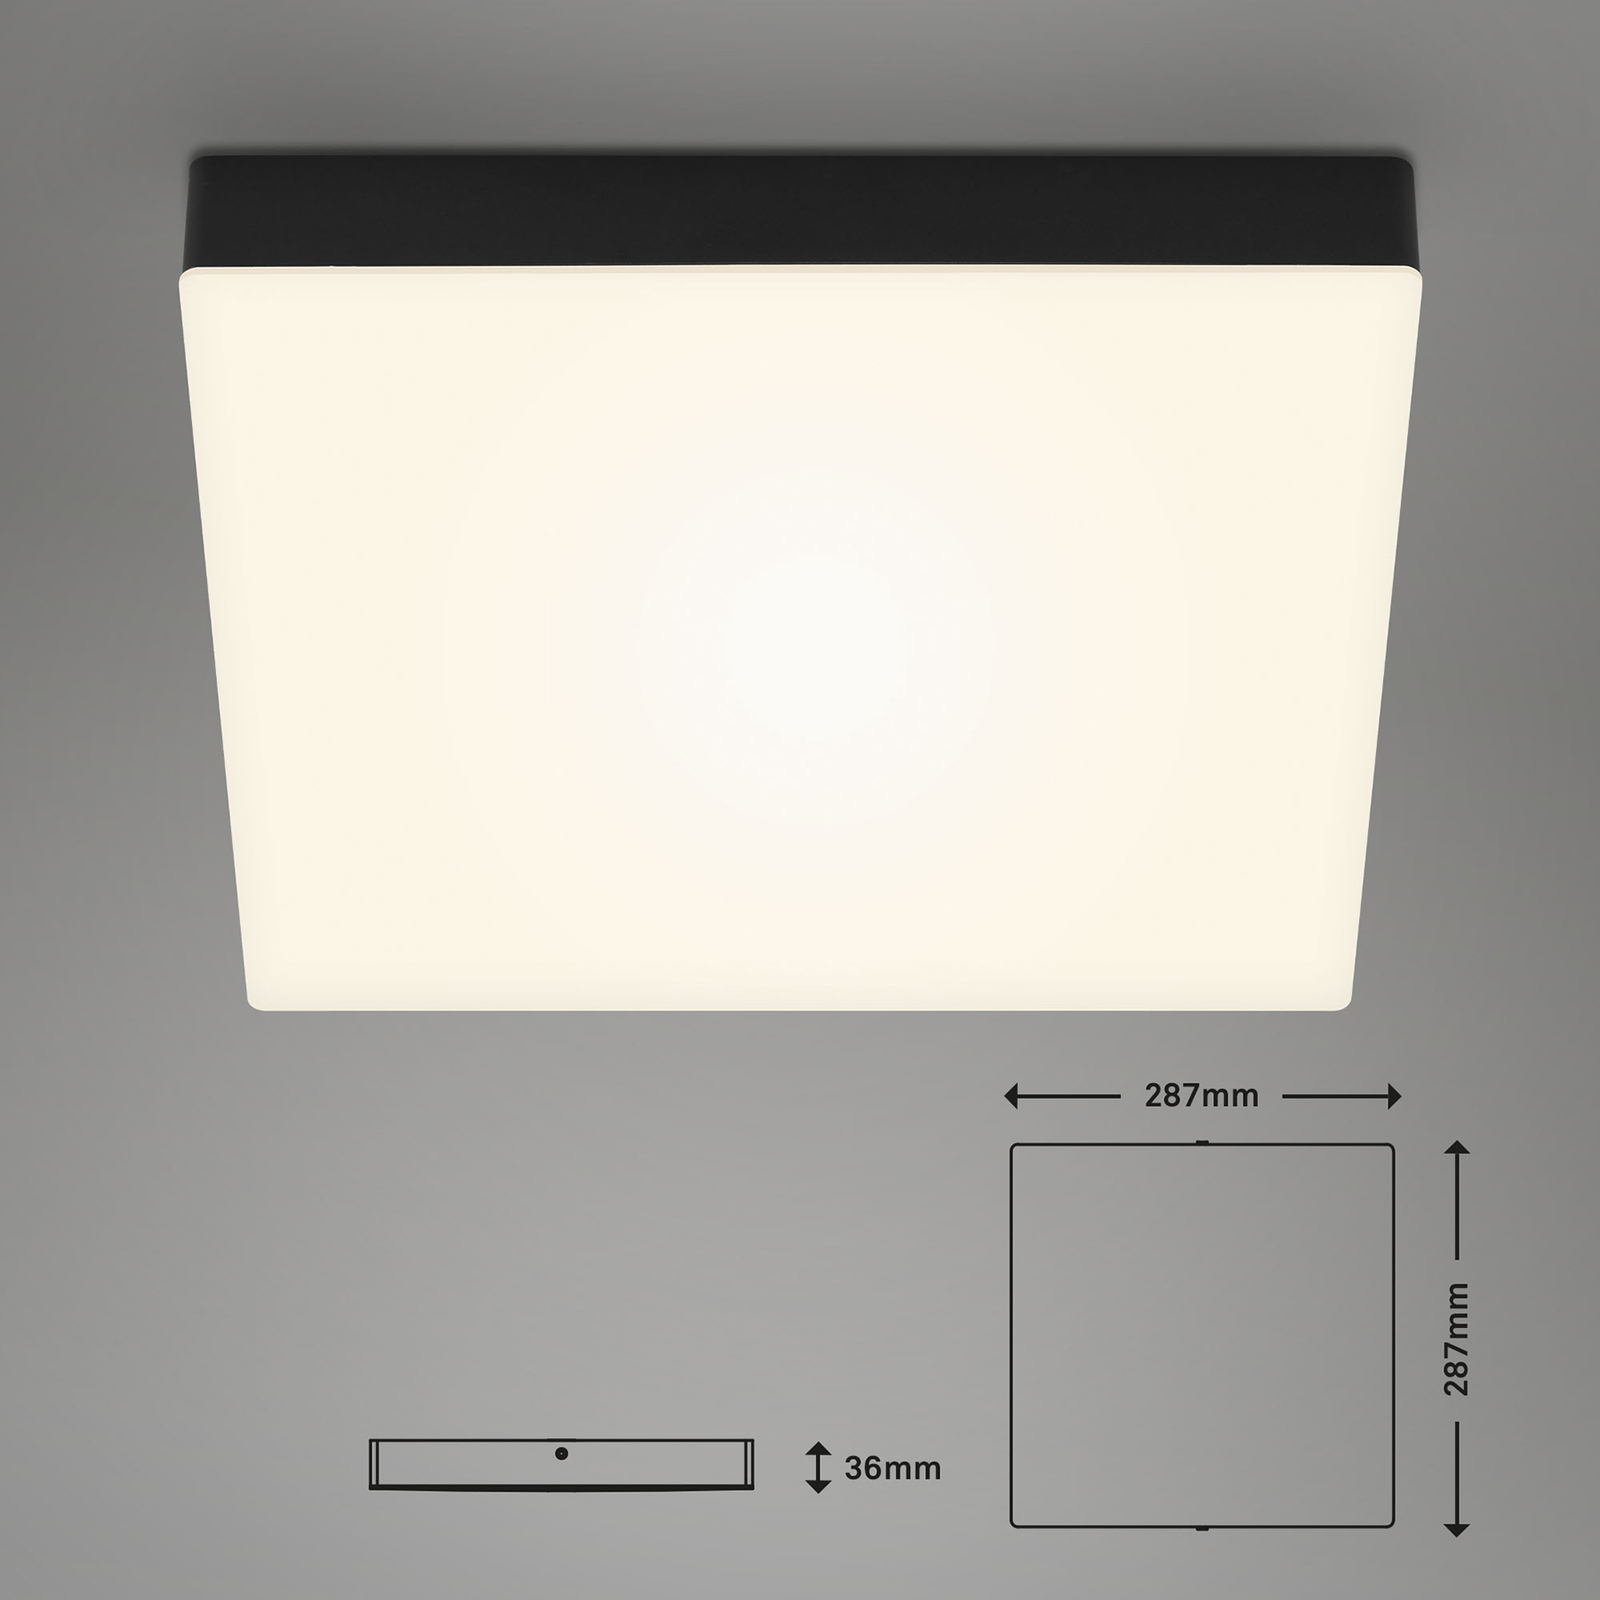 LED plafondlamp Flame, 3000K, 28,7x28,7cm, zwart